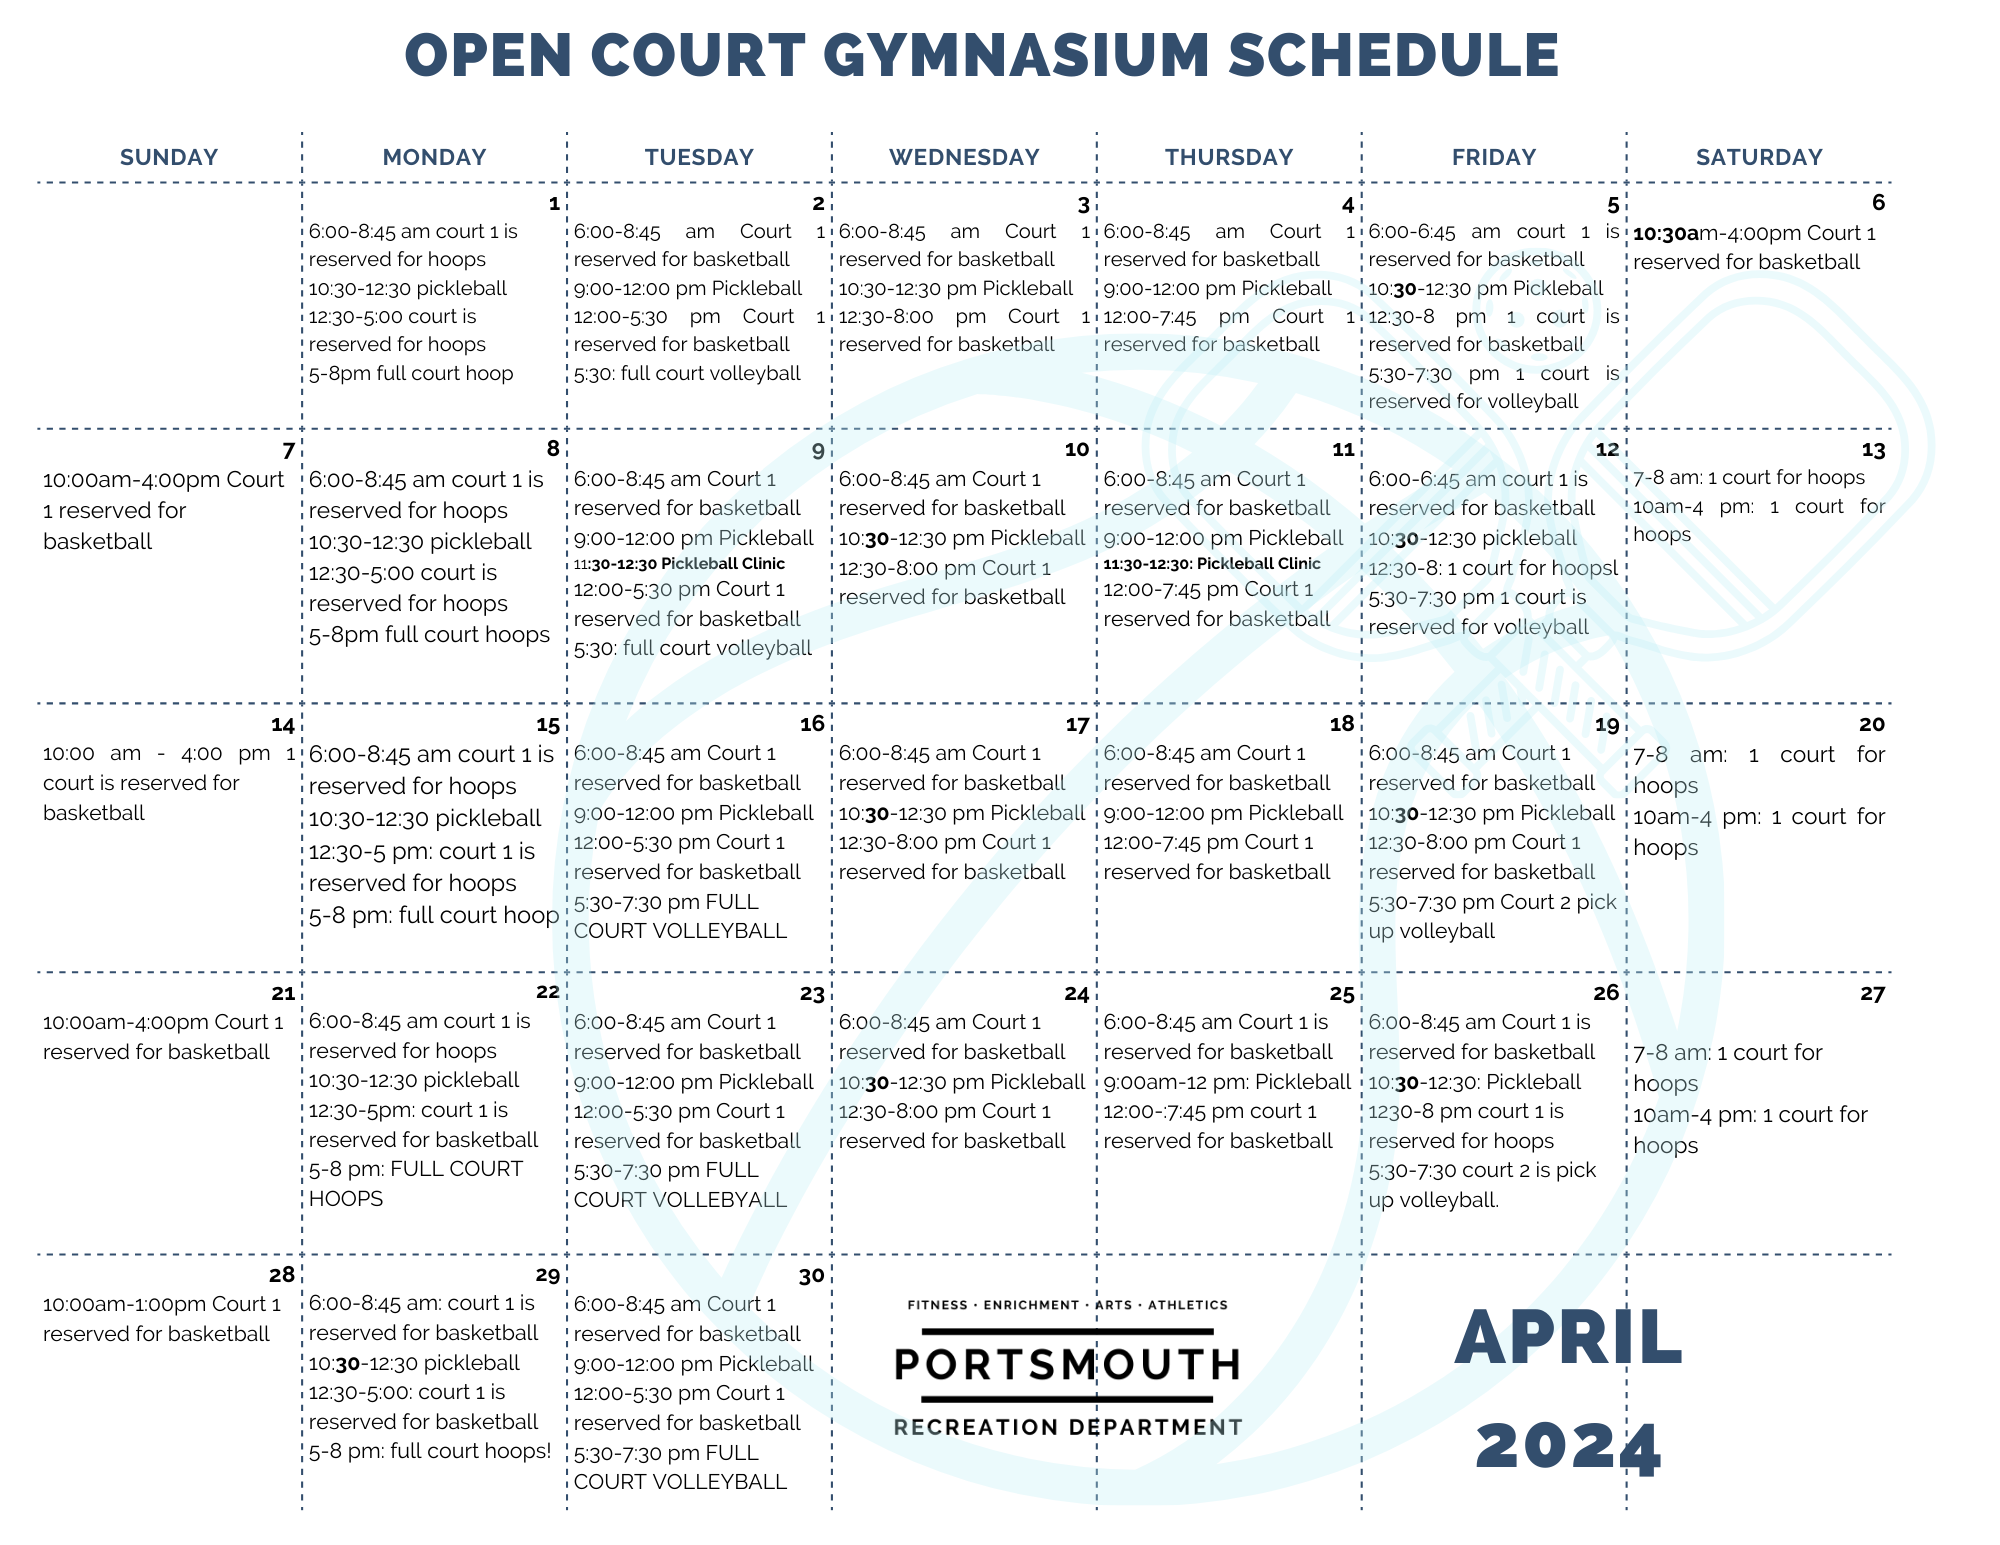 Spin Open Gym Schedule